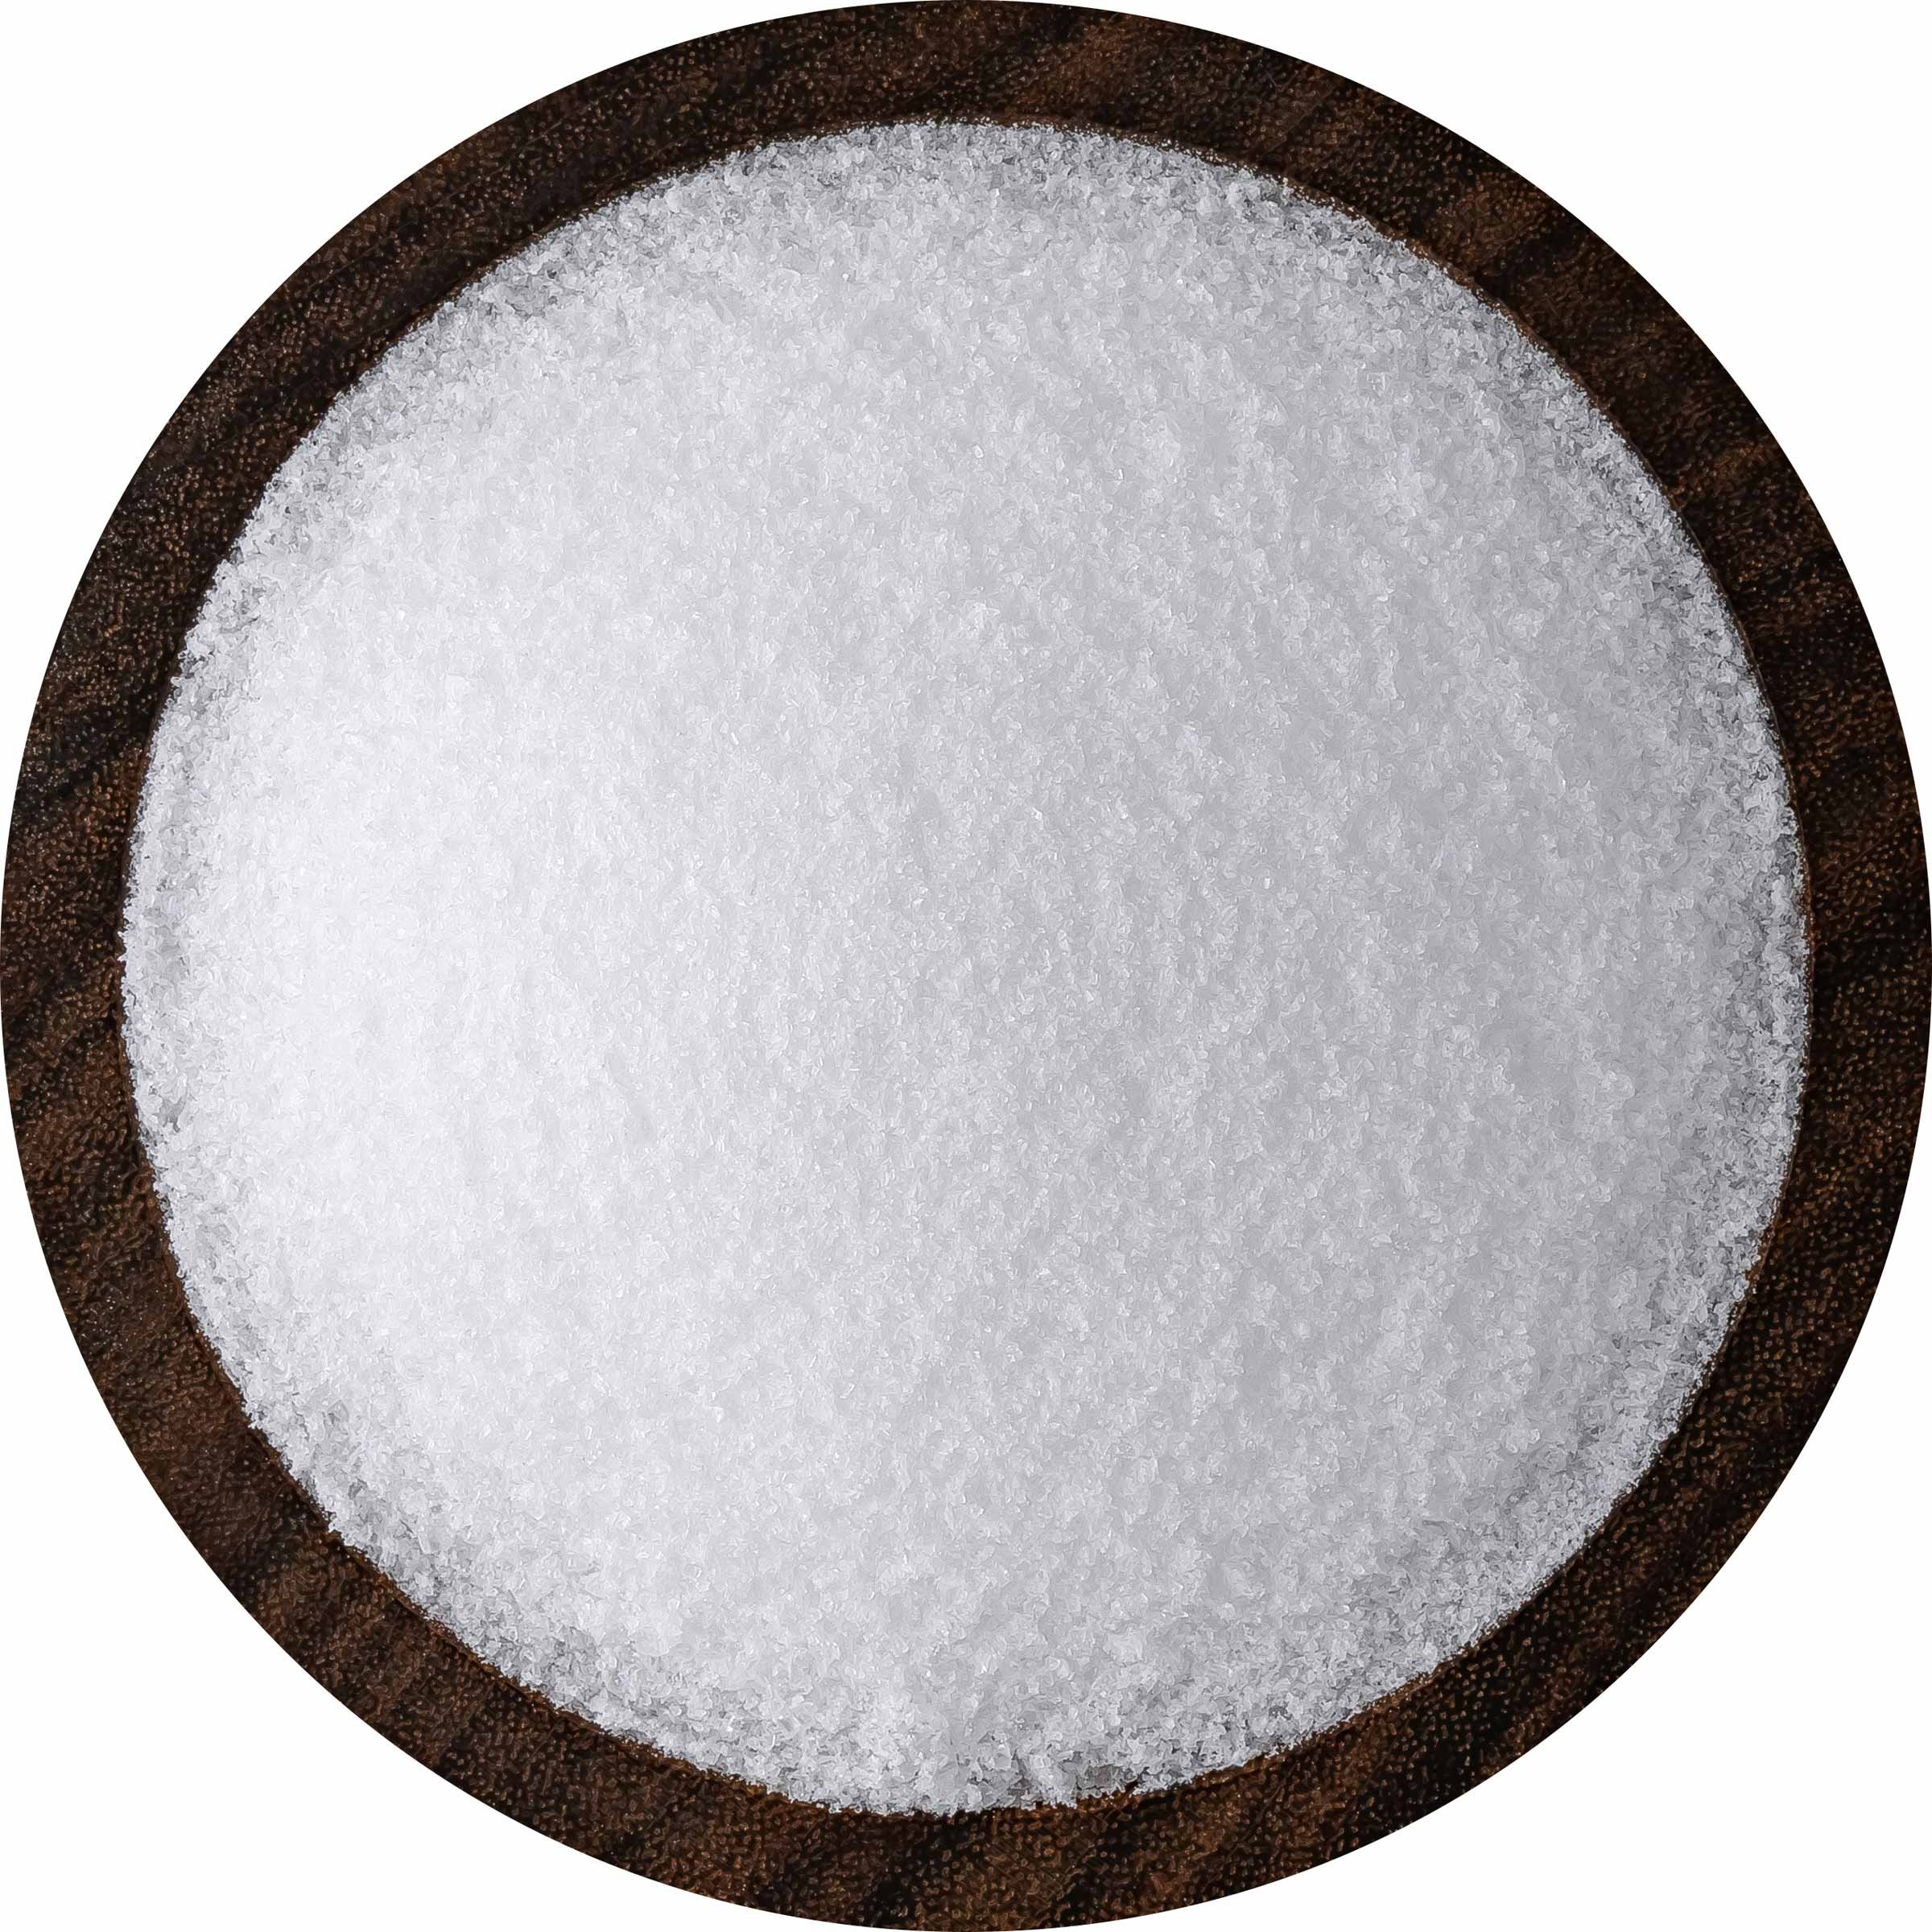 Pure Ocean® Sea Salt Bulk (Coarse Grain) - 55 lb Bag